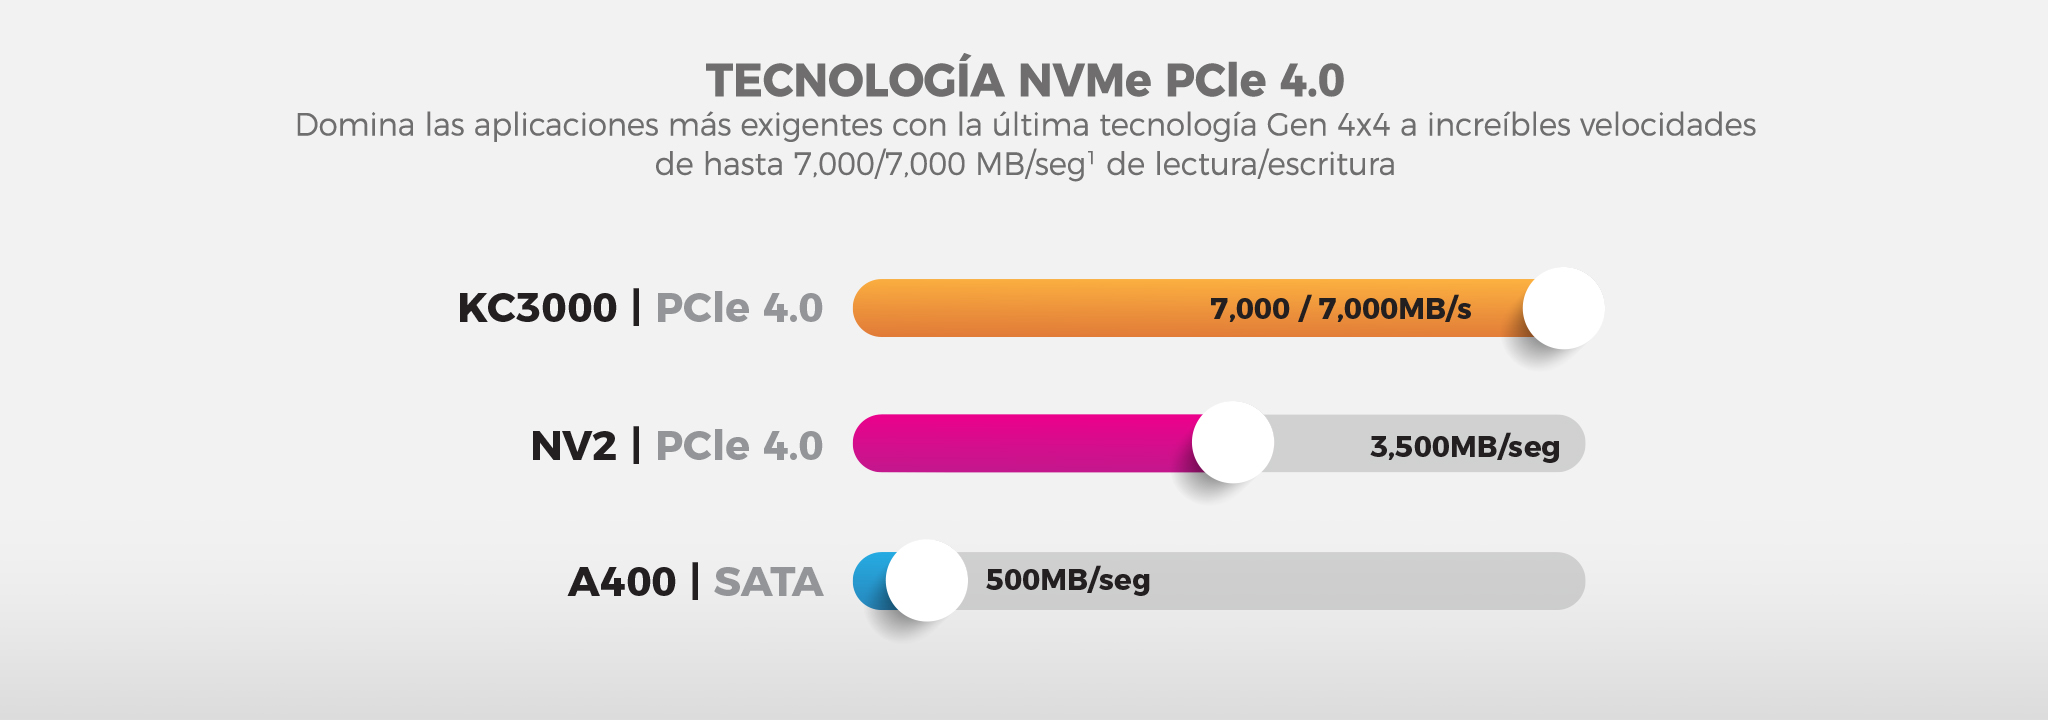 SKC3000D/2048G, Disque SSD 2 To M.2 (2280) NVMe PCIe Gen 4 x 4 KC3000